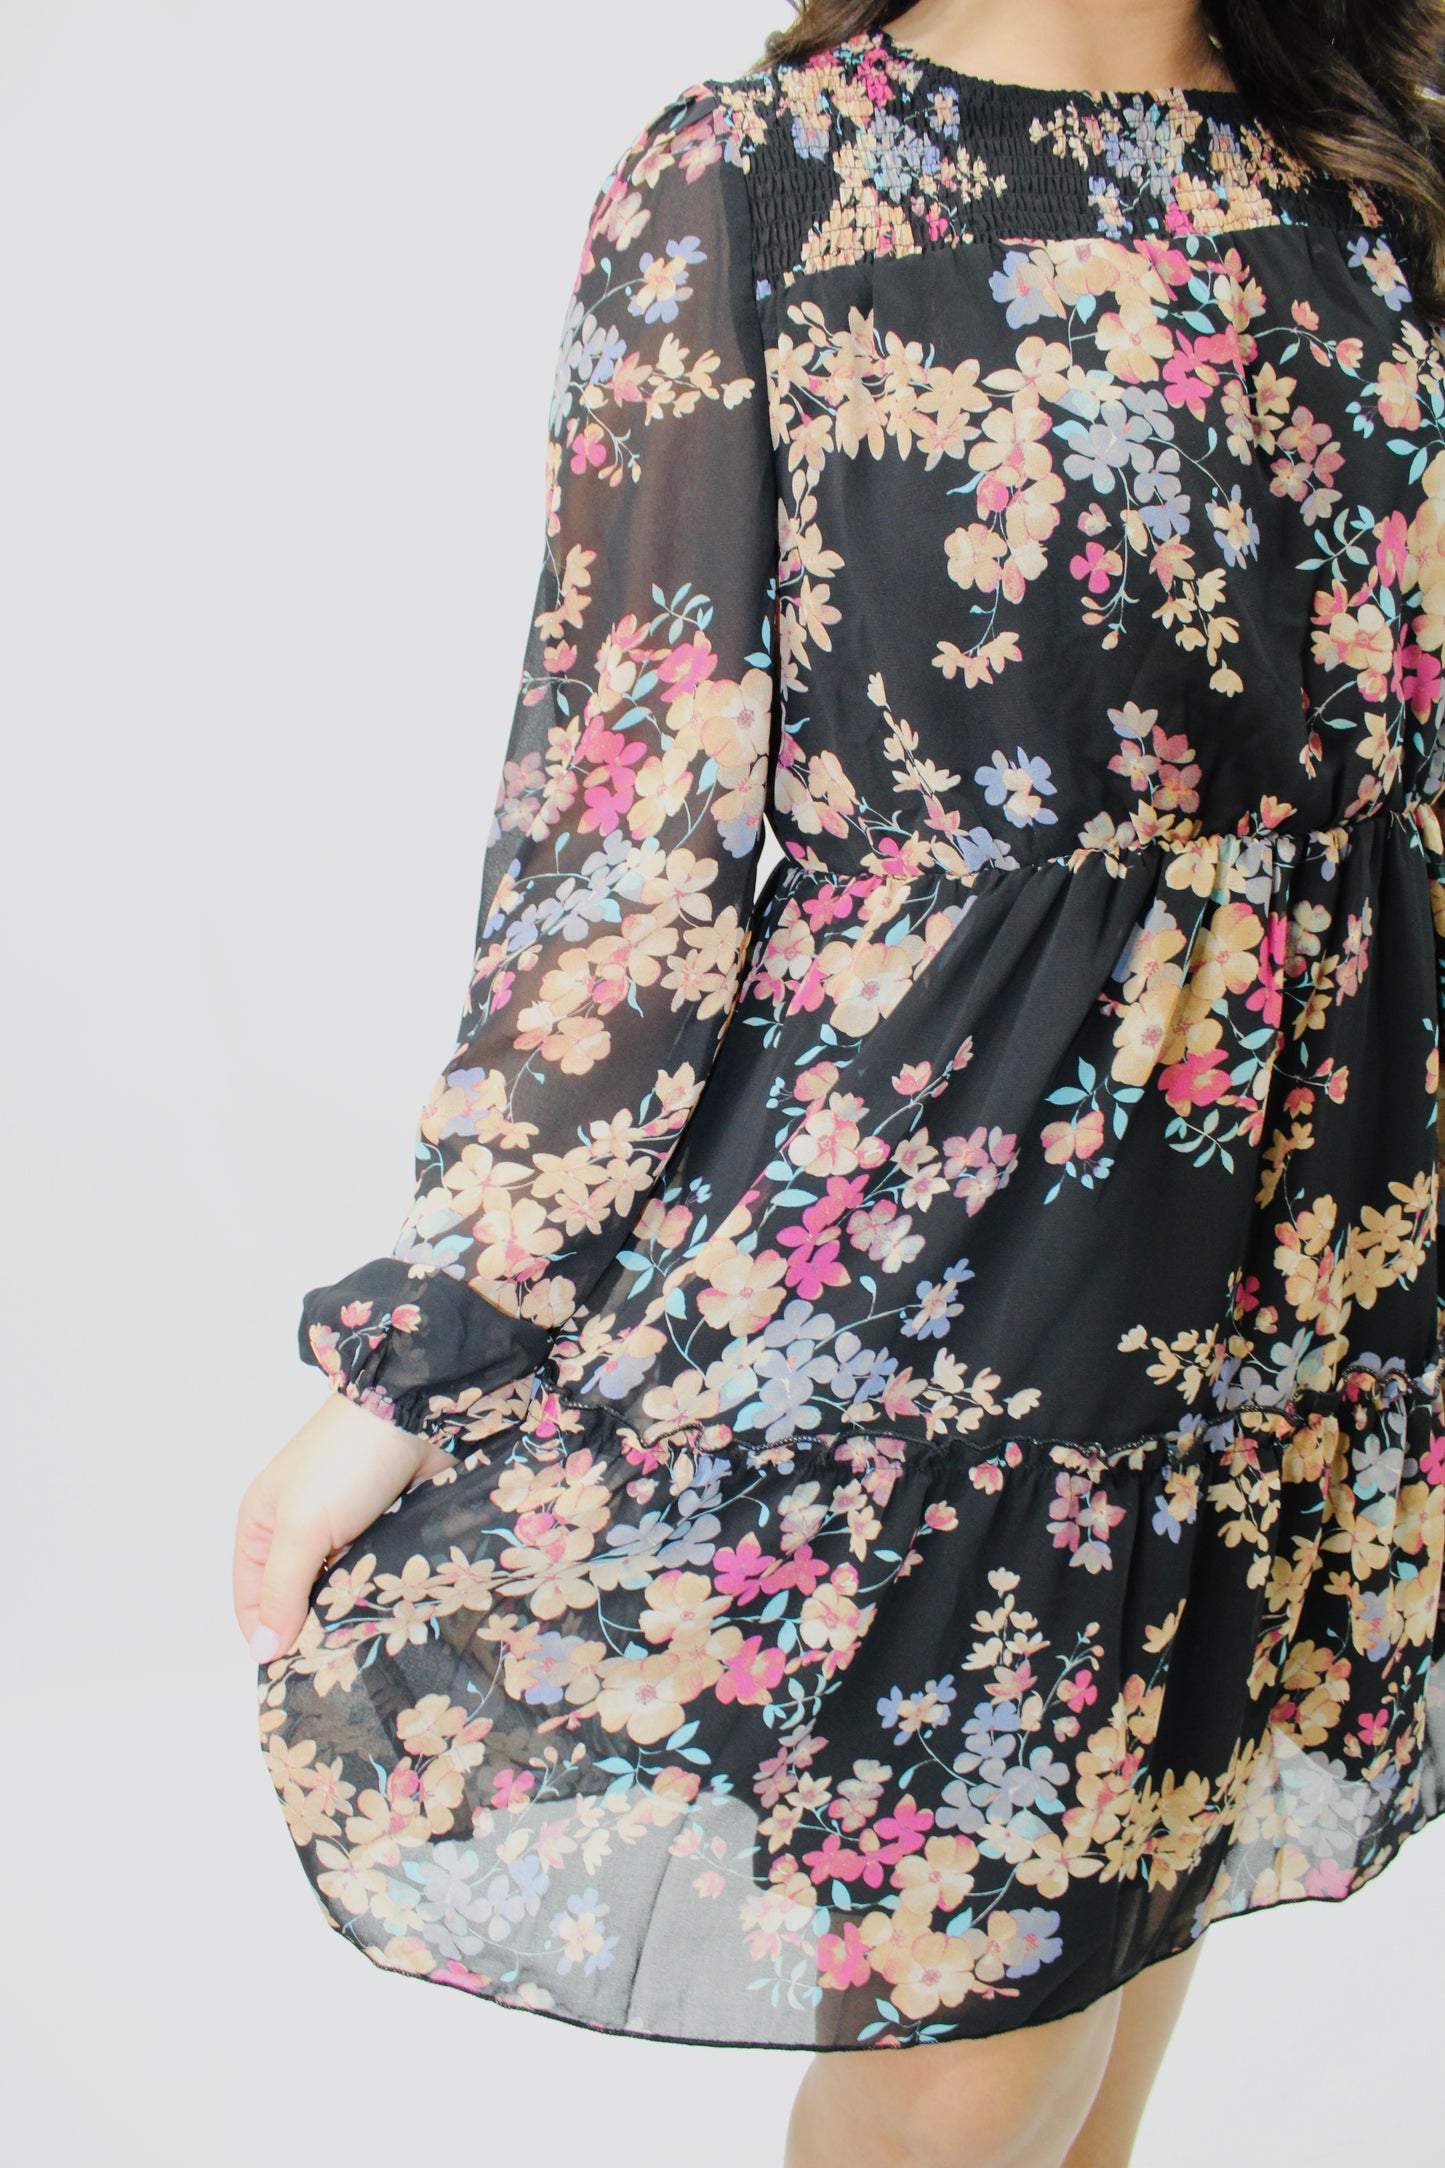 The Caroline Black Floral Print Dress